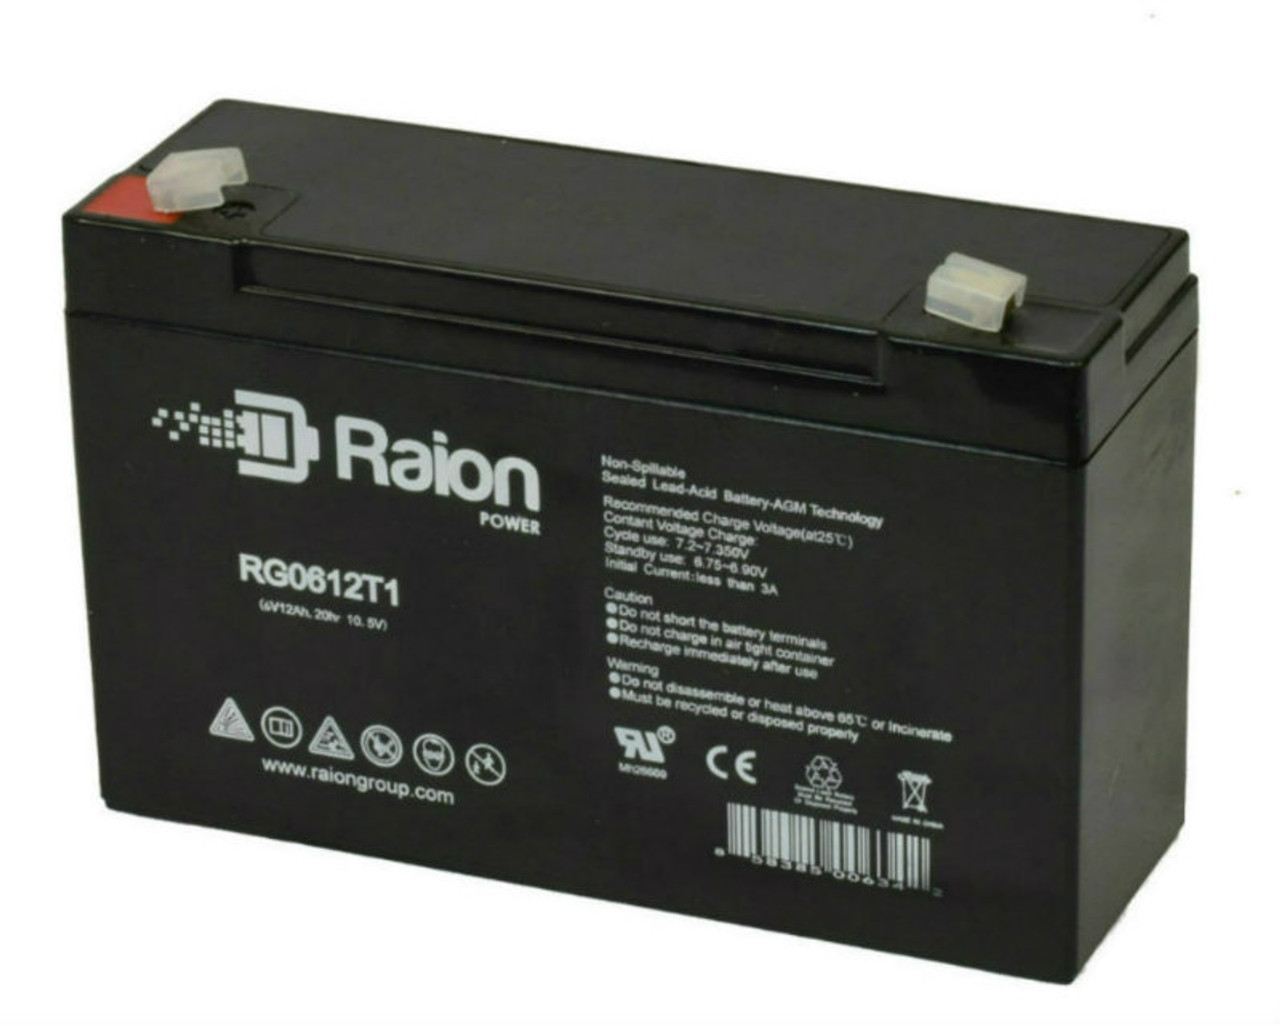 Raion Power RG06120T1 Replacement 6V 12Ah Emergency Light Battery for Sonnenschein 1000010136